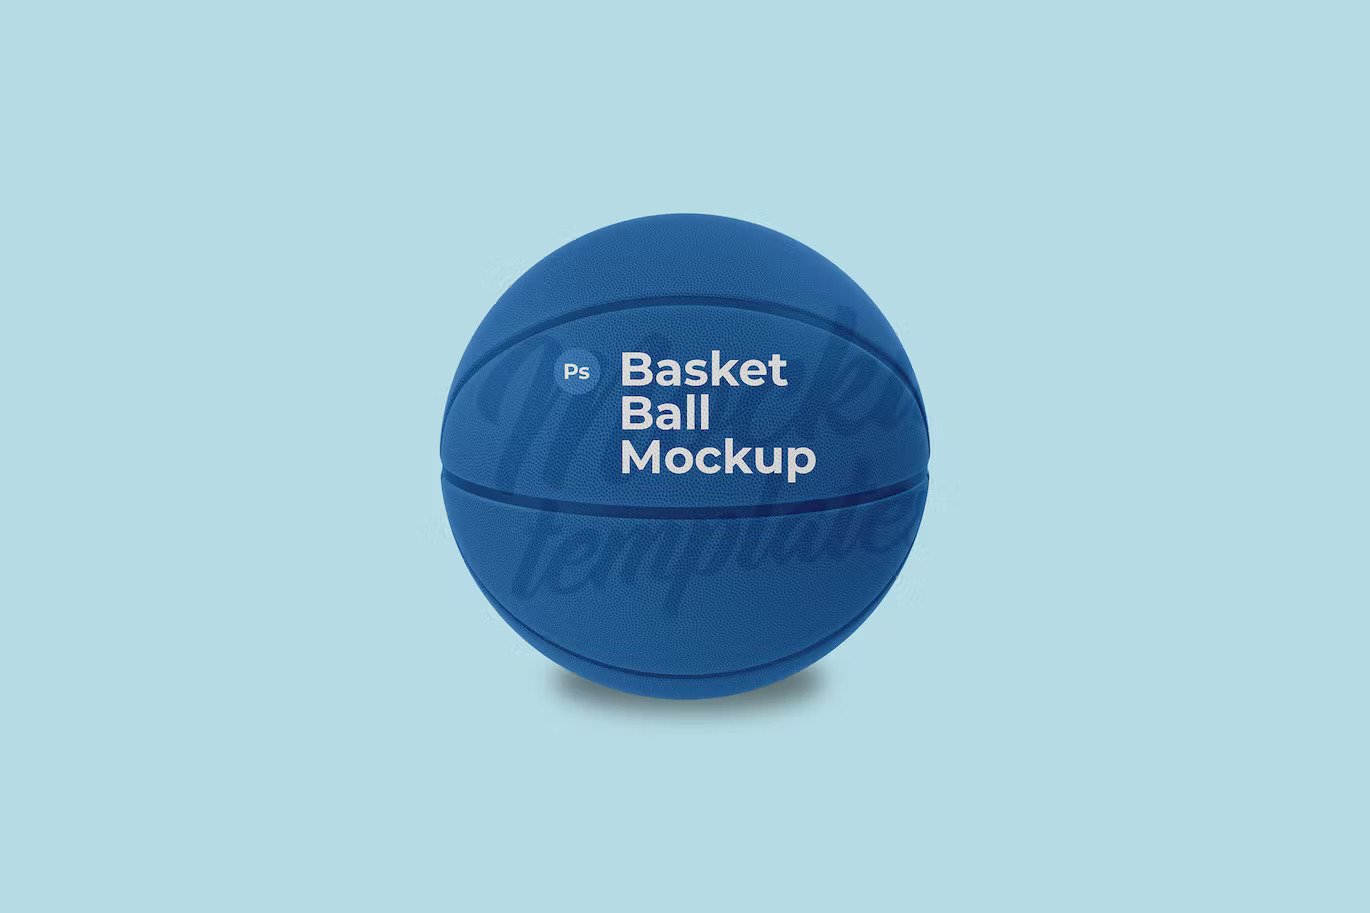 A blue basketball mockup template